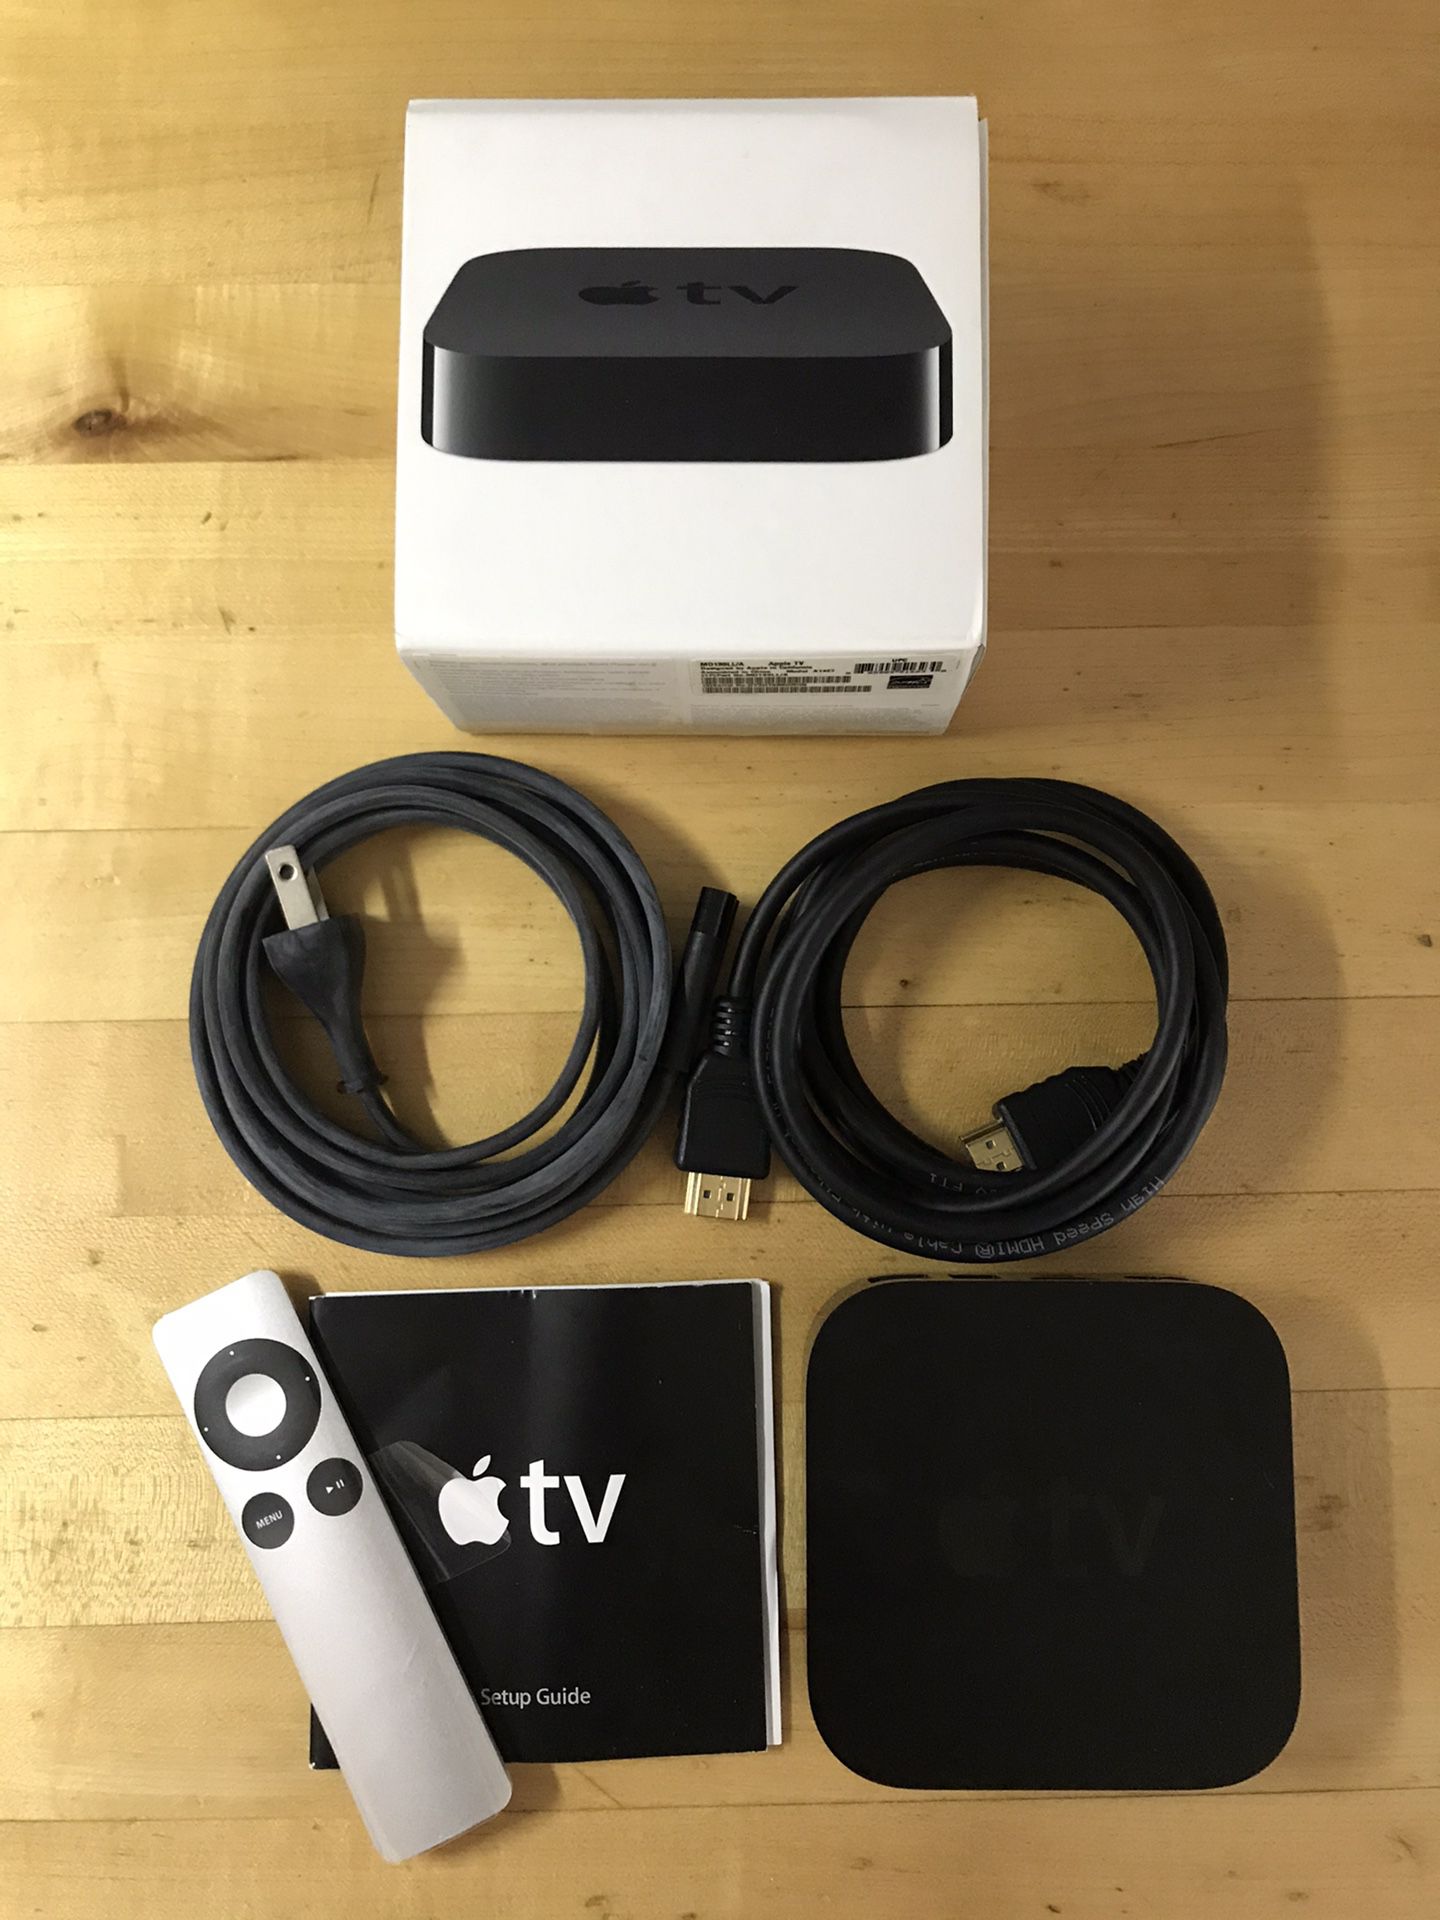 Apple TV (3rd gen) New in box